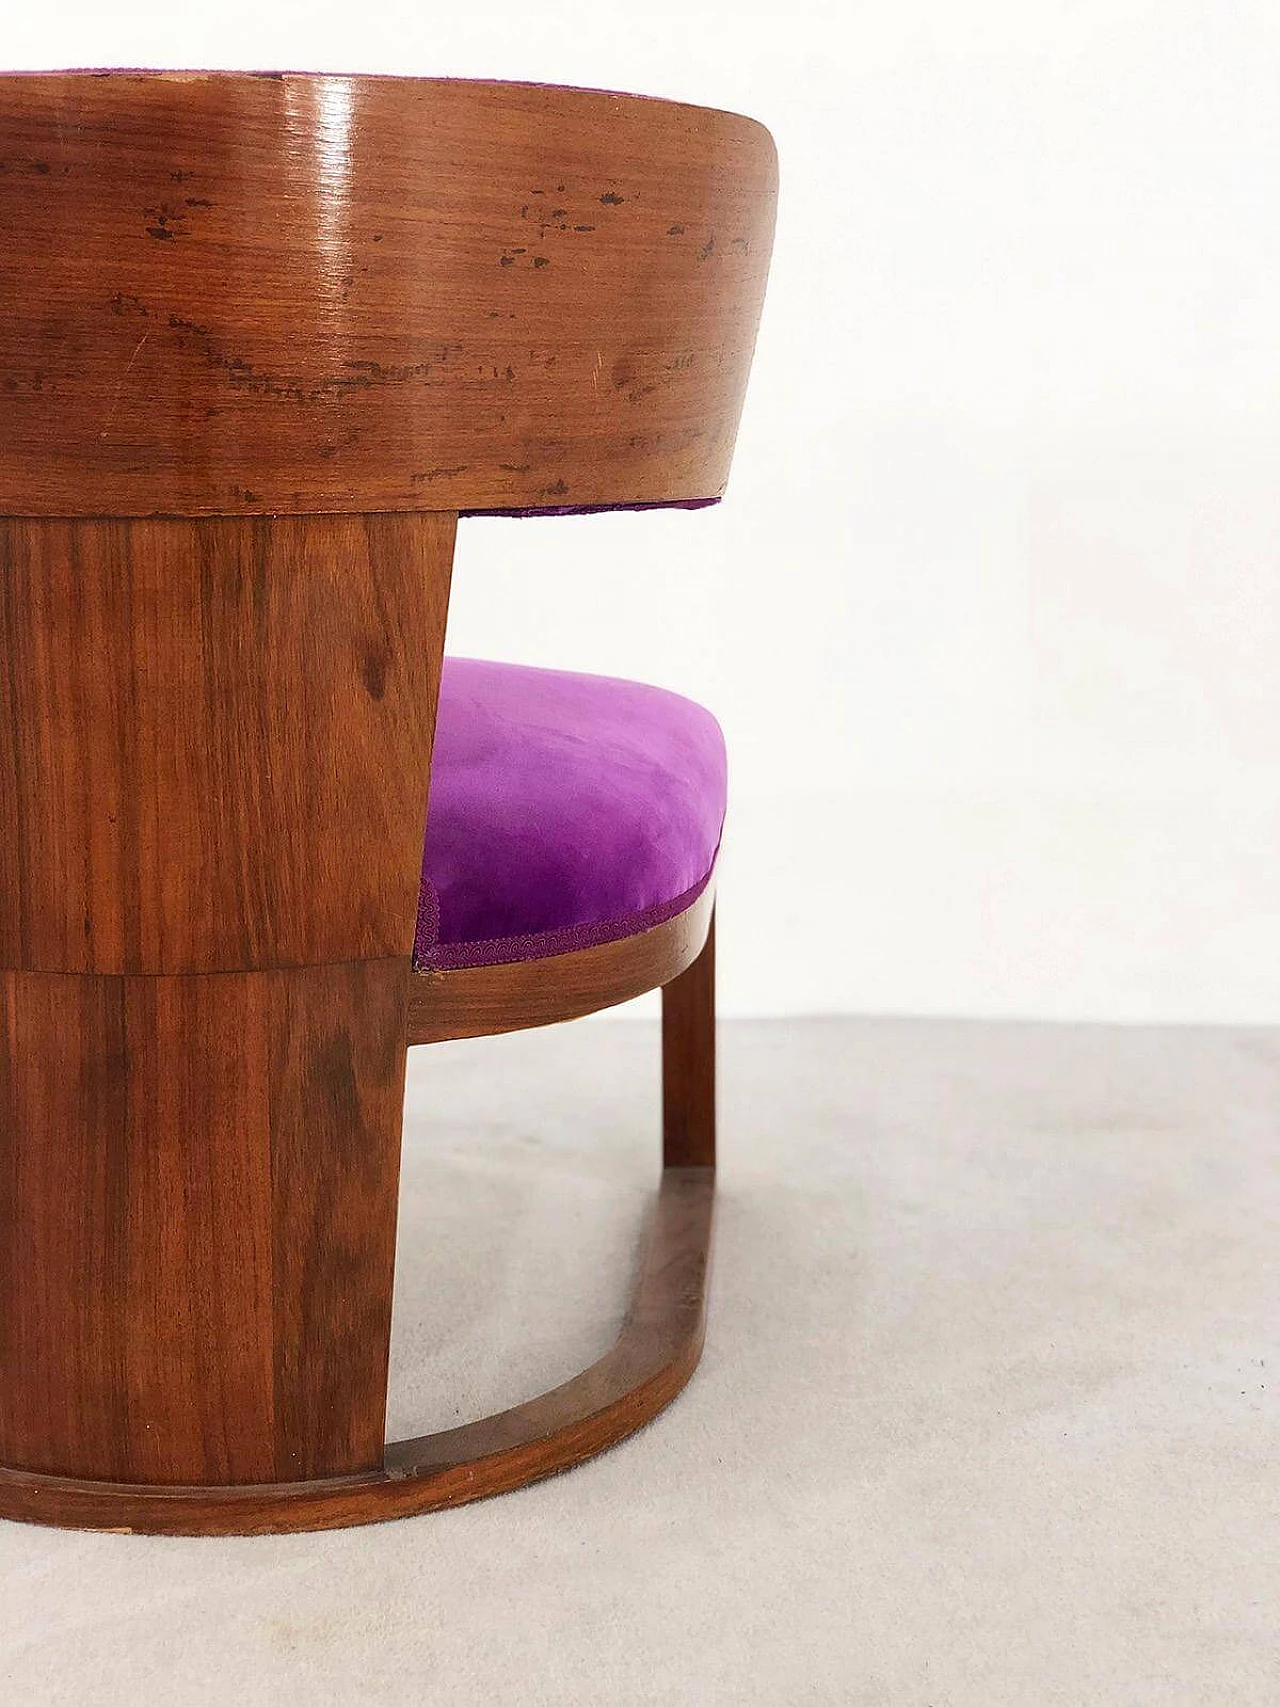 Ernesto Lapadula's armchair in wood and purple velvet, 1930s 1466324